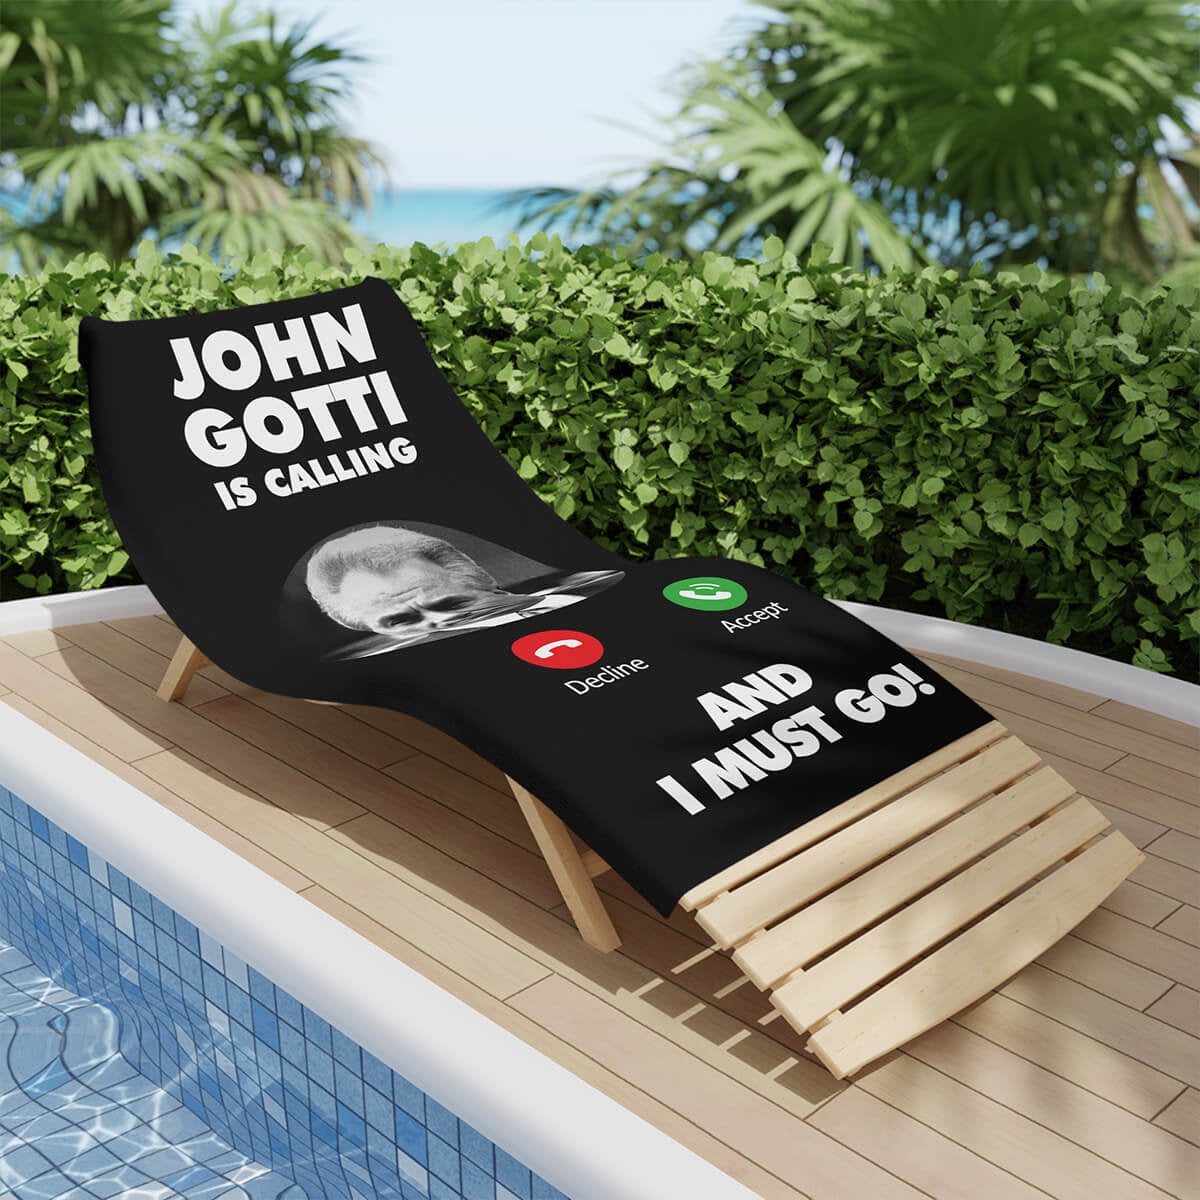 John Gotti is Calling and I Must Go Beach Towel